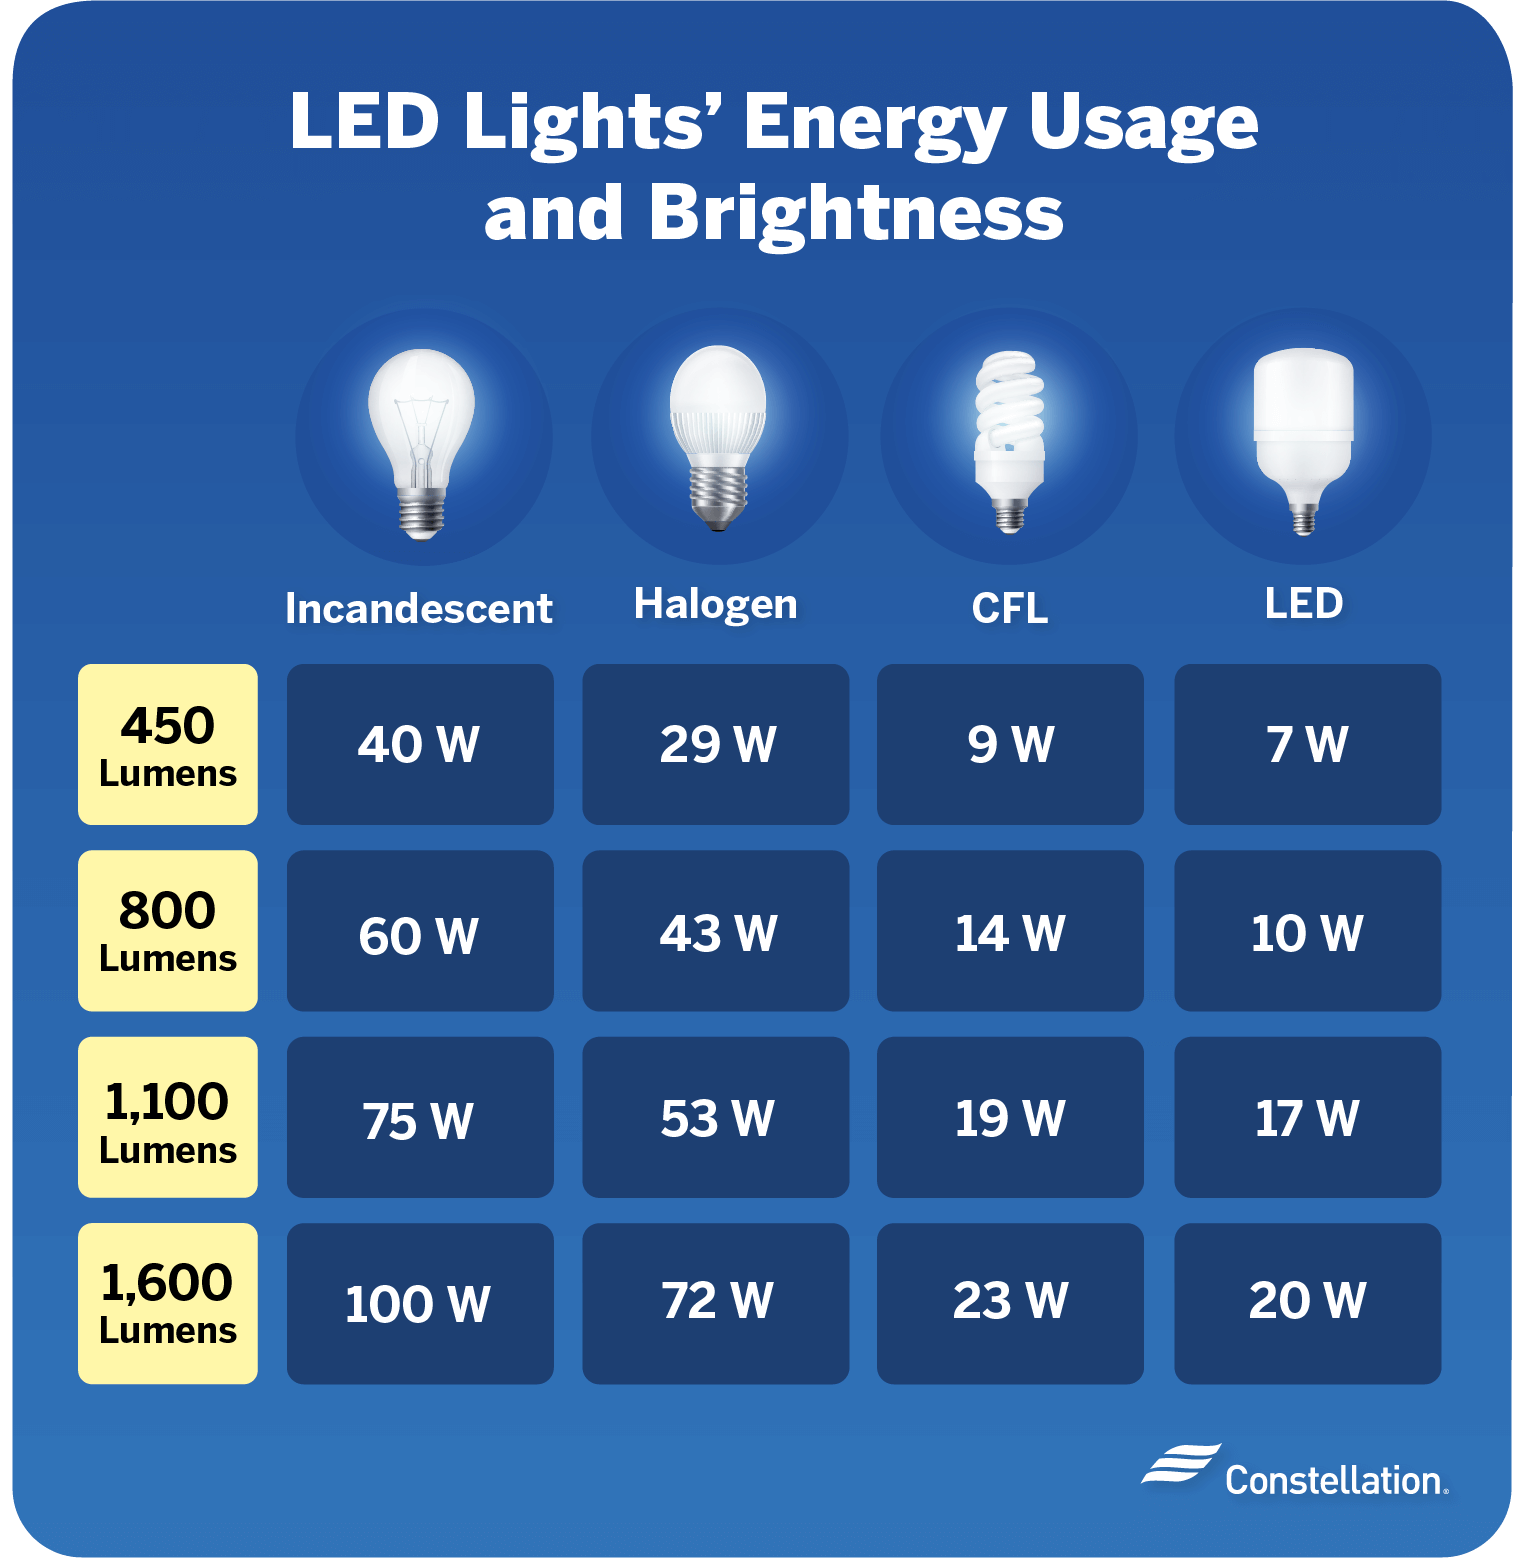 Led lights energy usage and brightness.